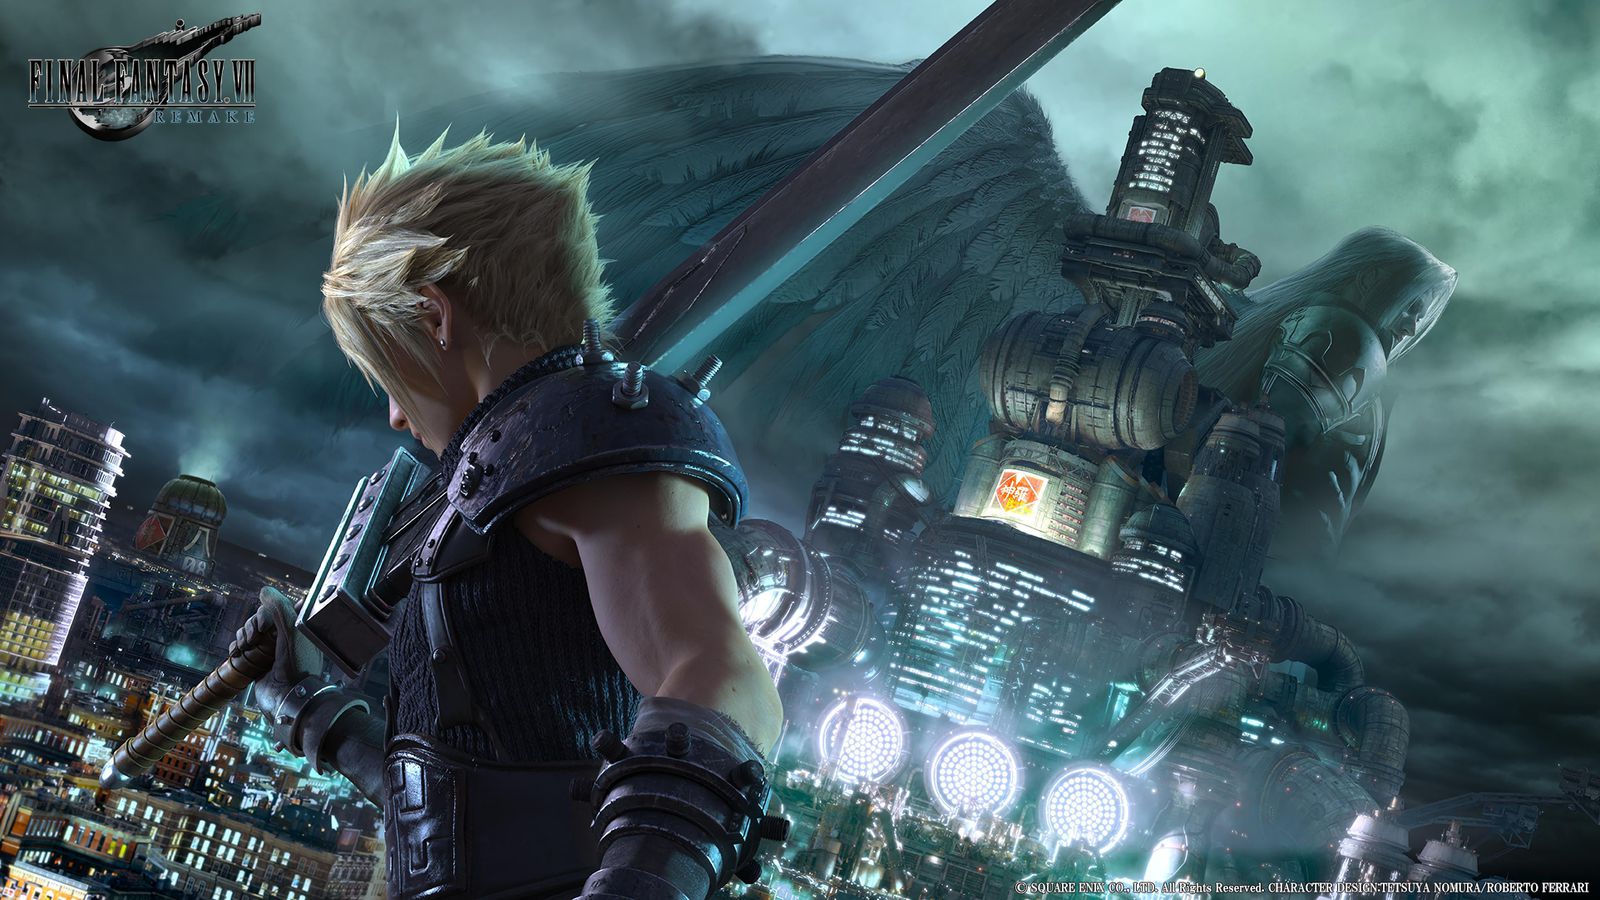 Final Fantasy VII remake release date